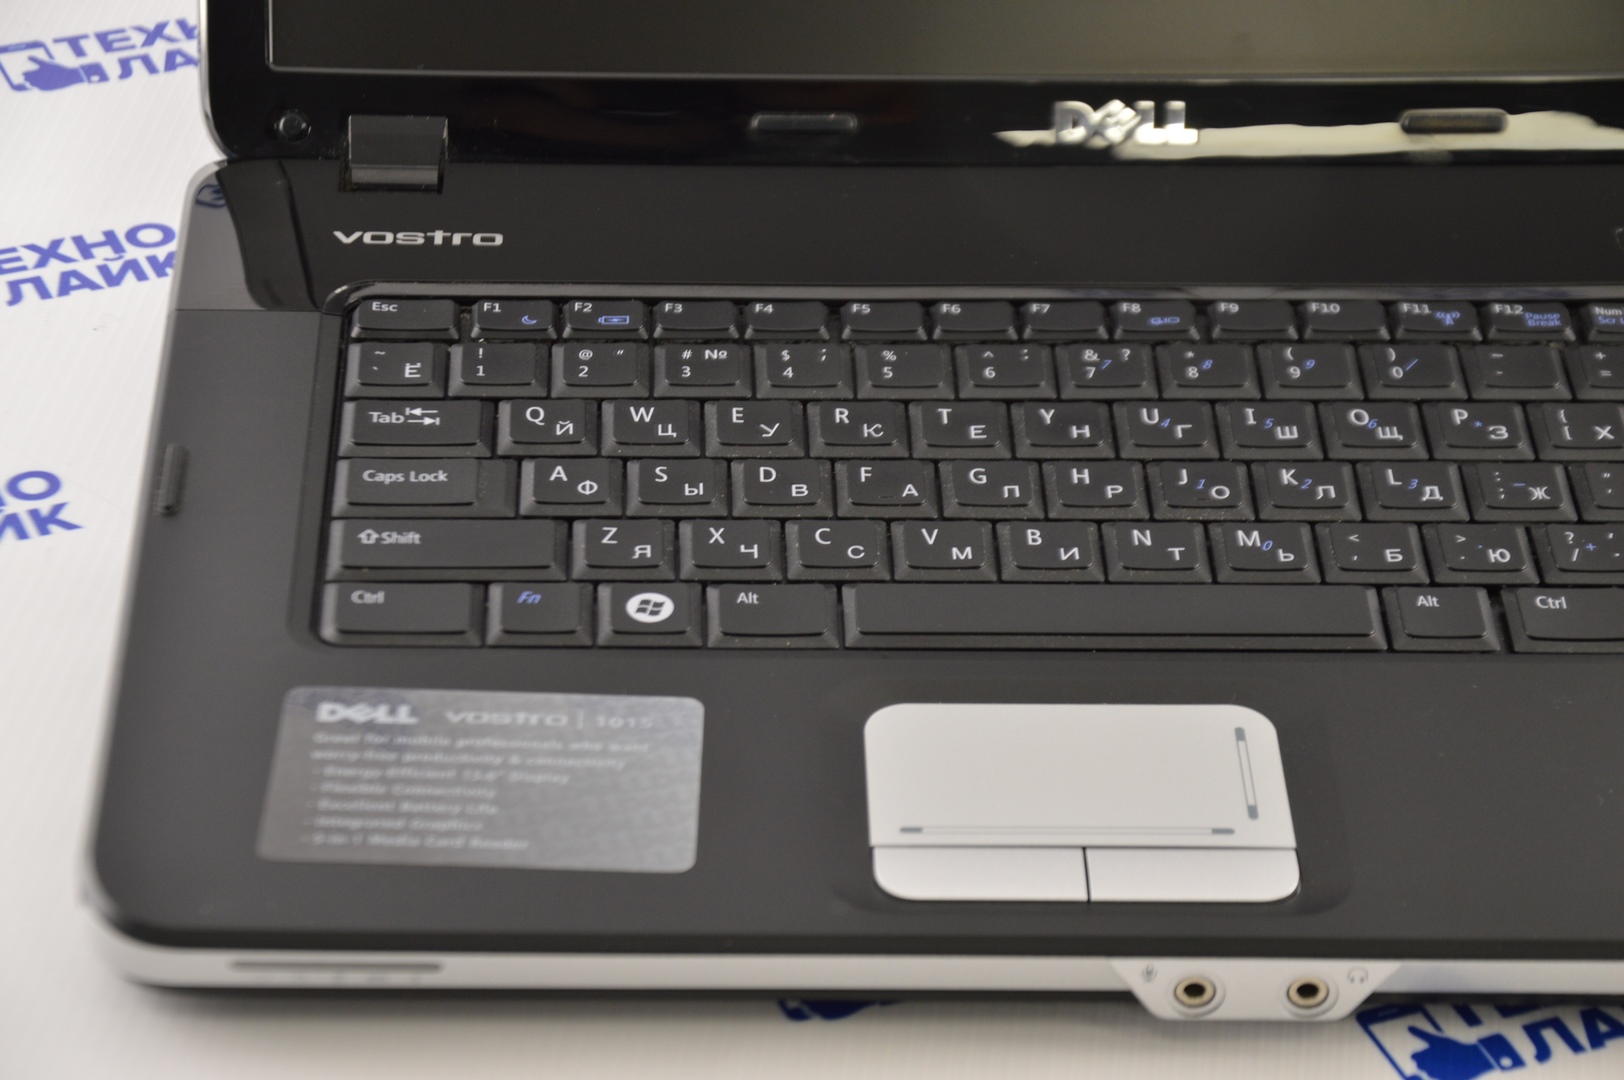 Ноутбук dell Vostro 1015. Vostro 1015 8761. Dell Vostro 1015  2010 года выпуска. Intel gma x3100